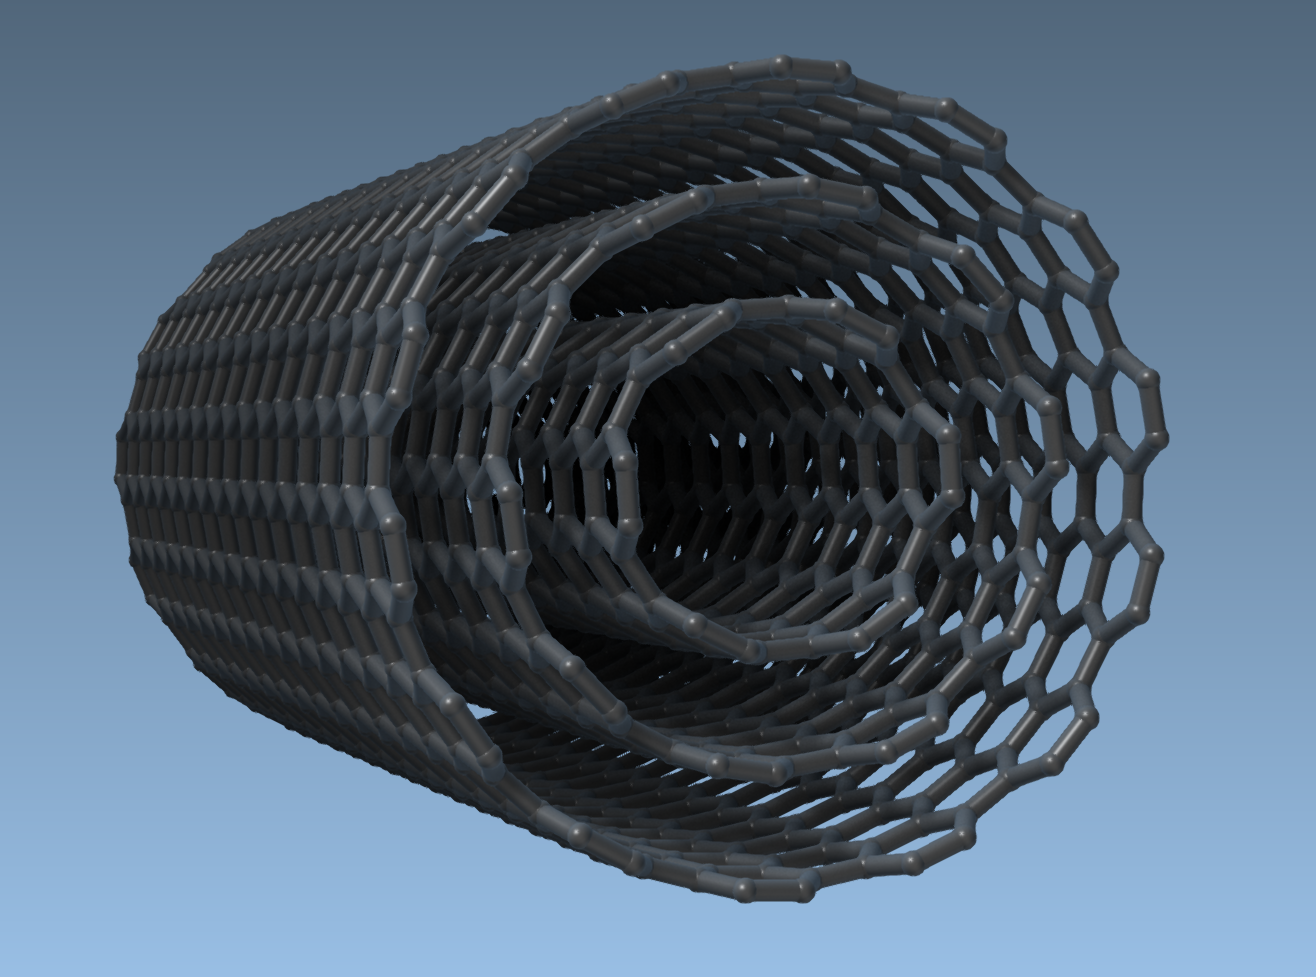 Multi-walled carbon nanotube